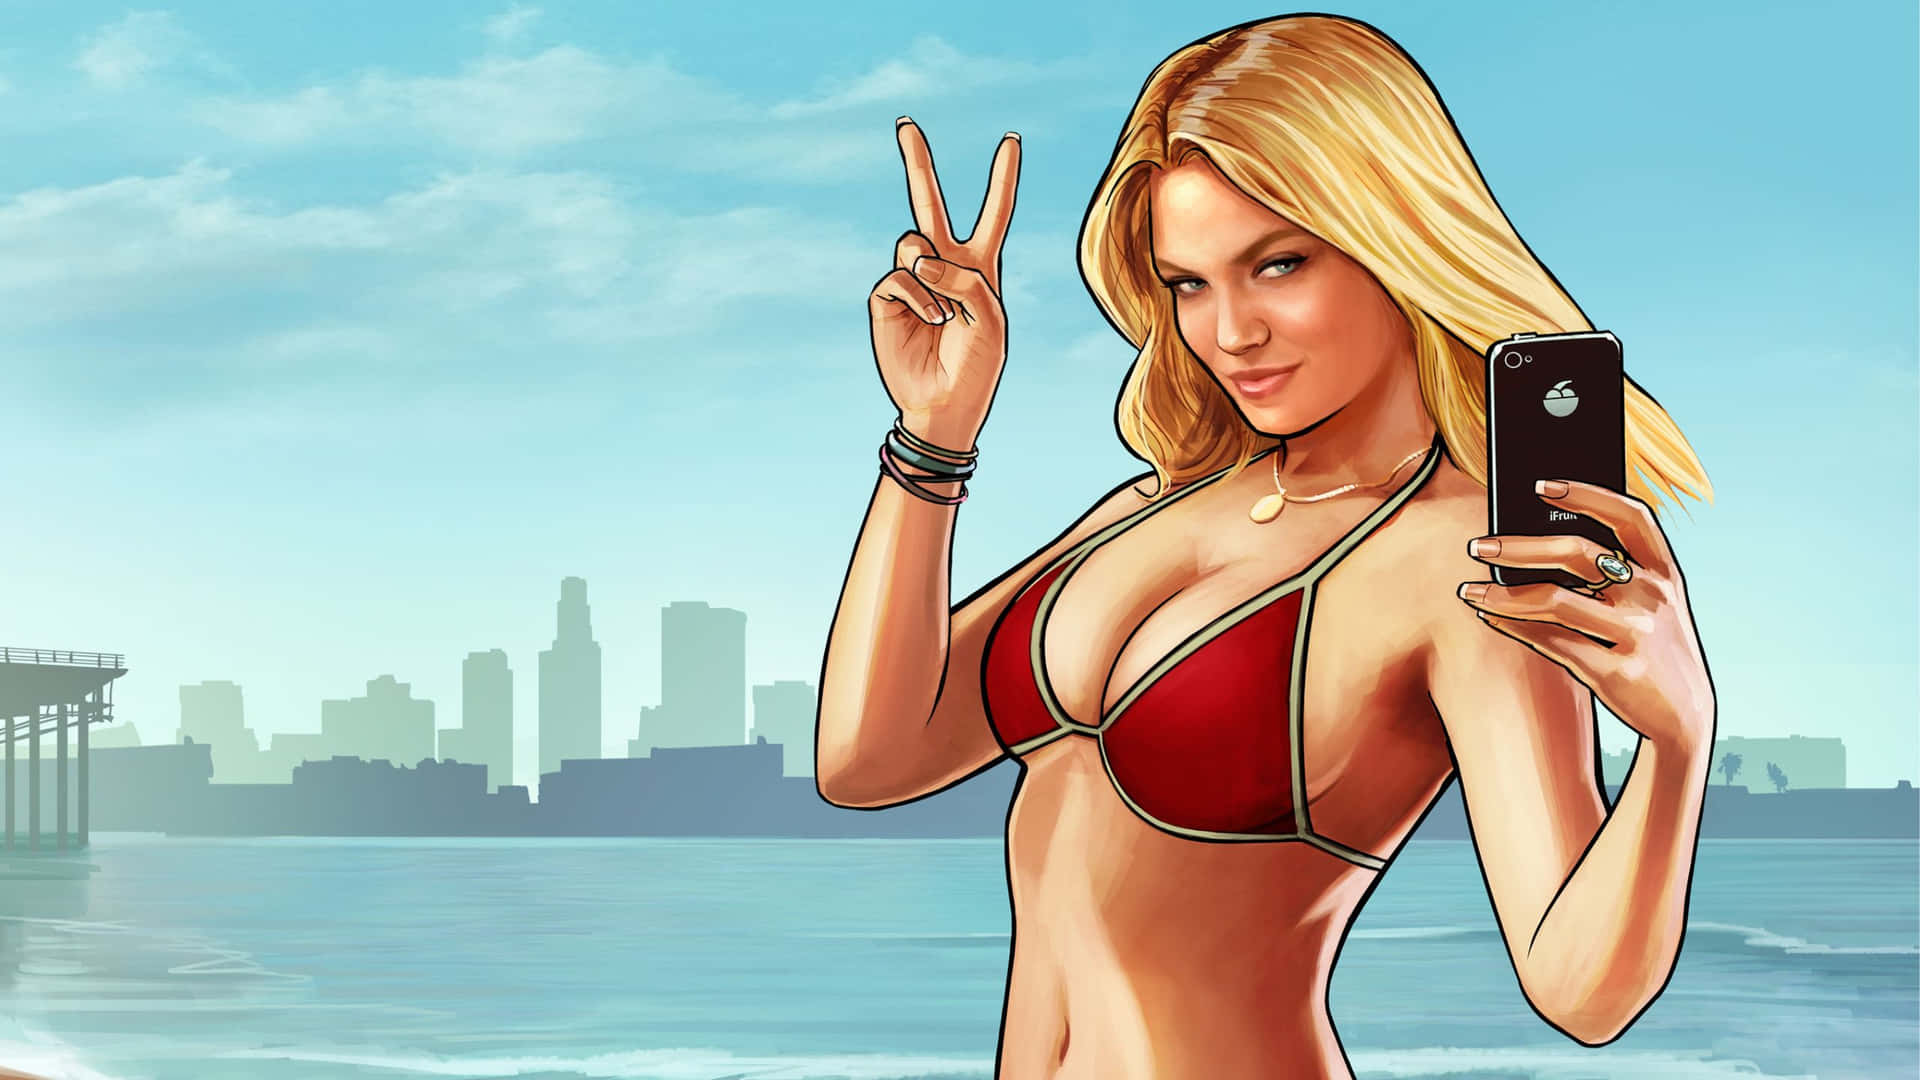 1440p Grand Theft Auto V Background Peace Sign